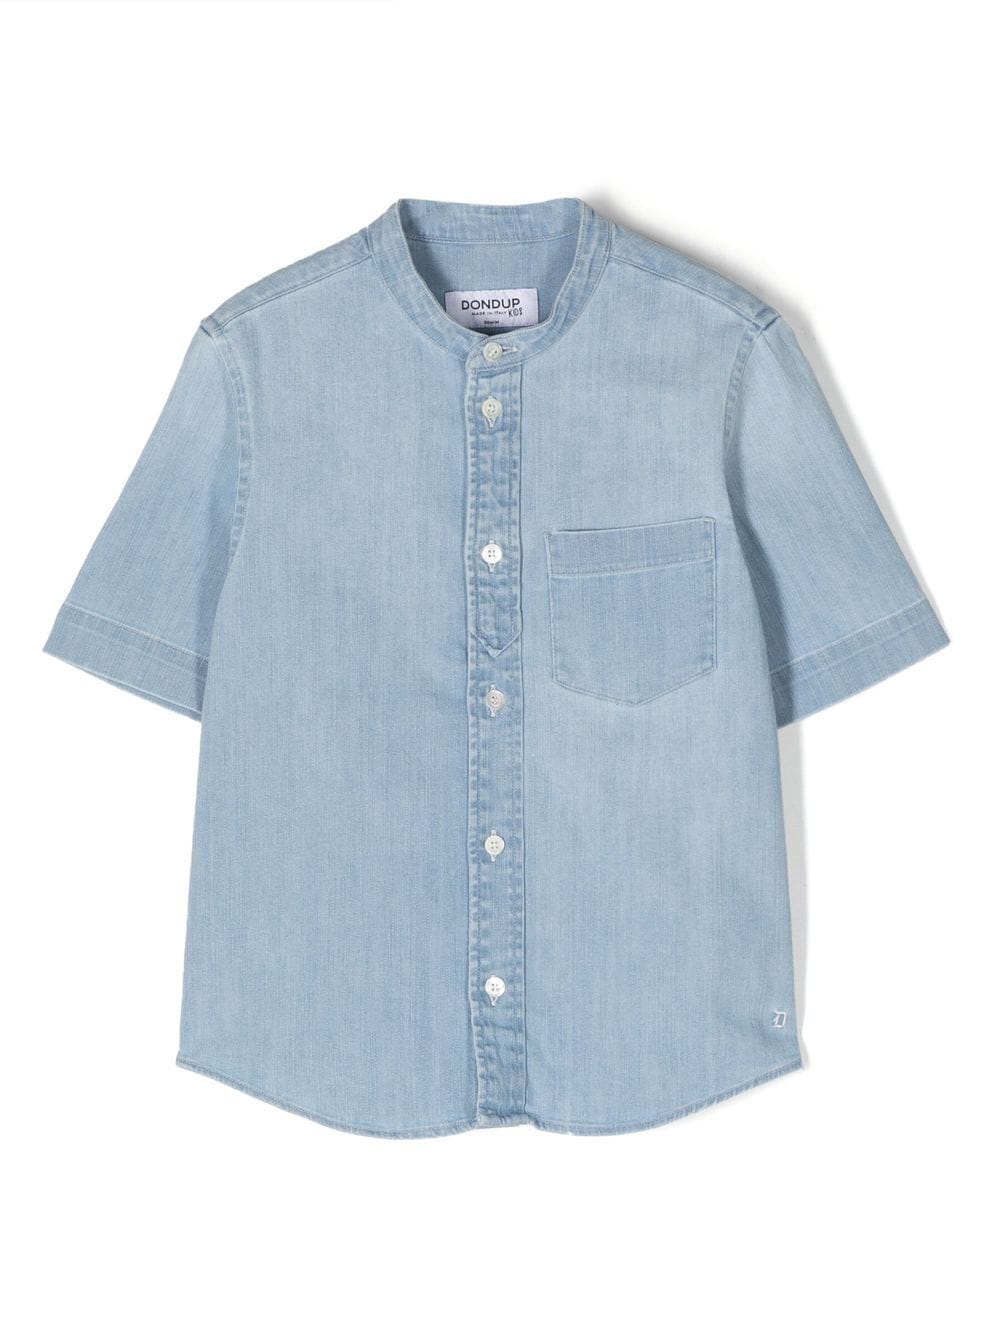 Dondup Kids' Light Blue Denim Short-sleeved Shirt